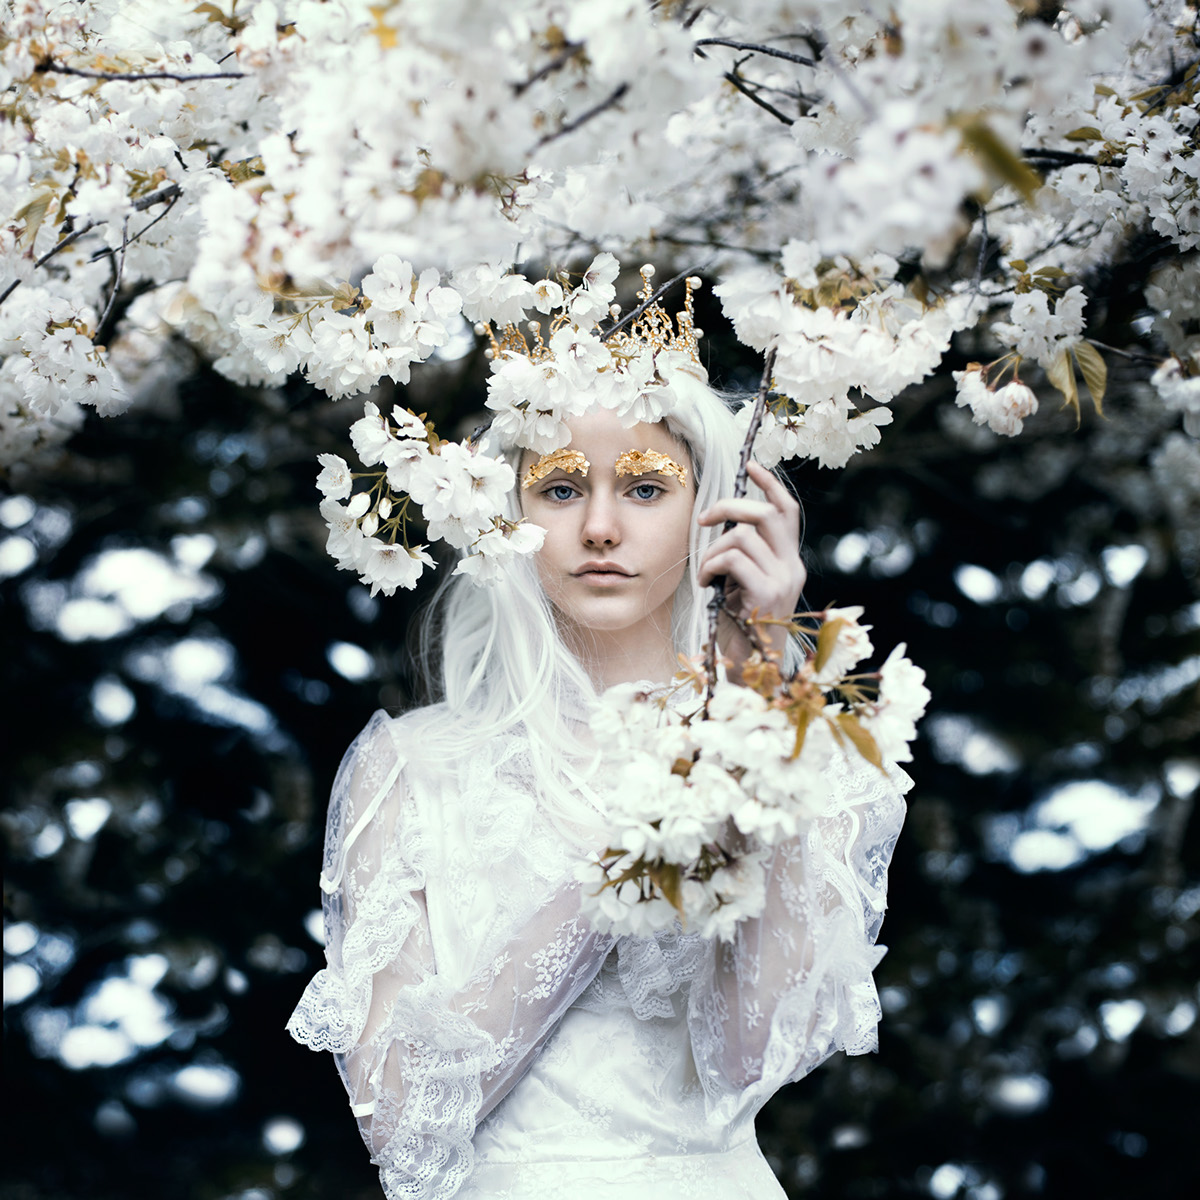 bella kotak fairytale spring england english in bloom blossoms Nature portrait Portraiture